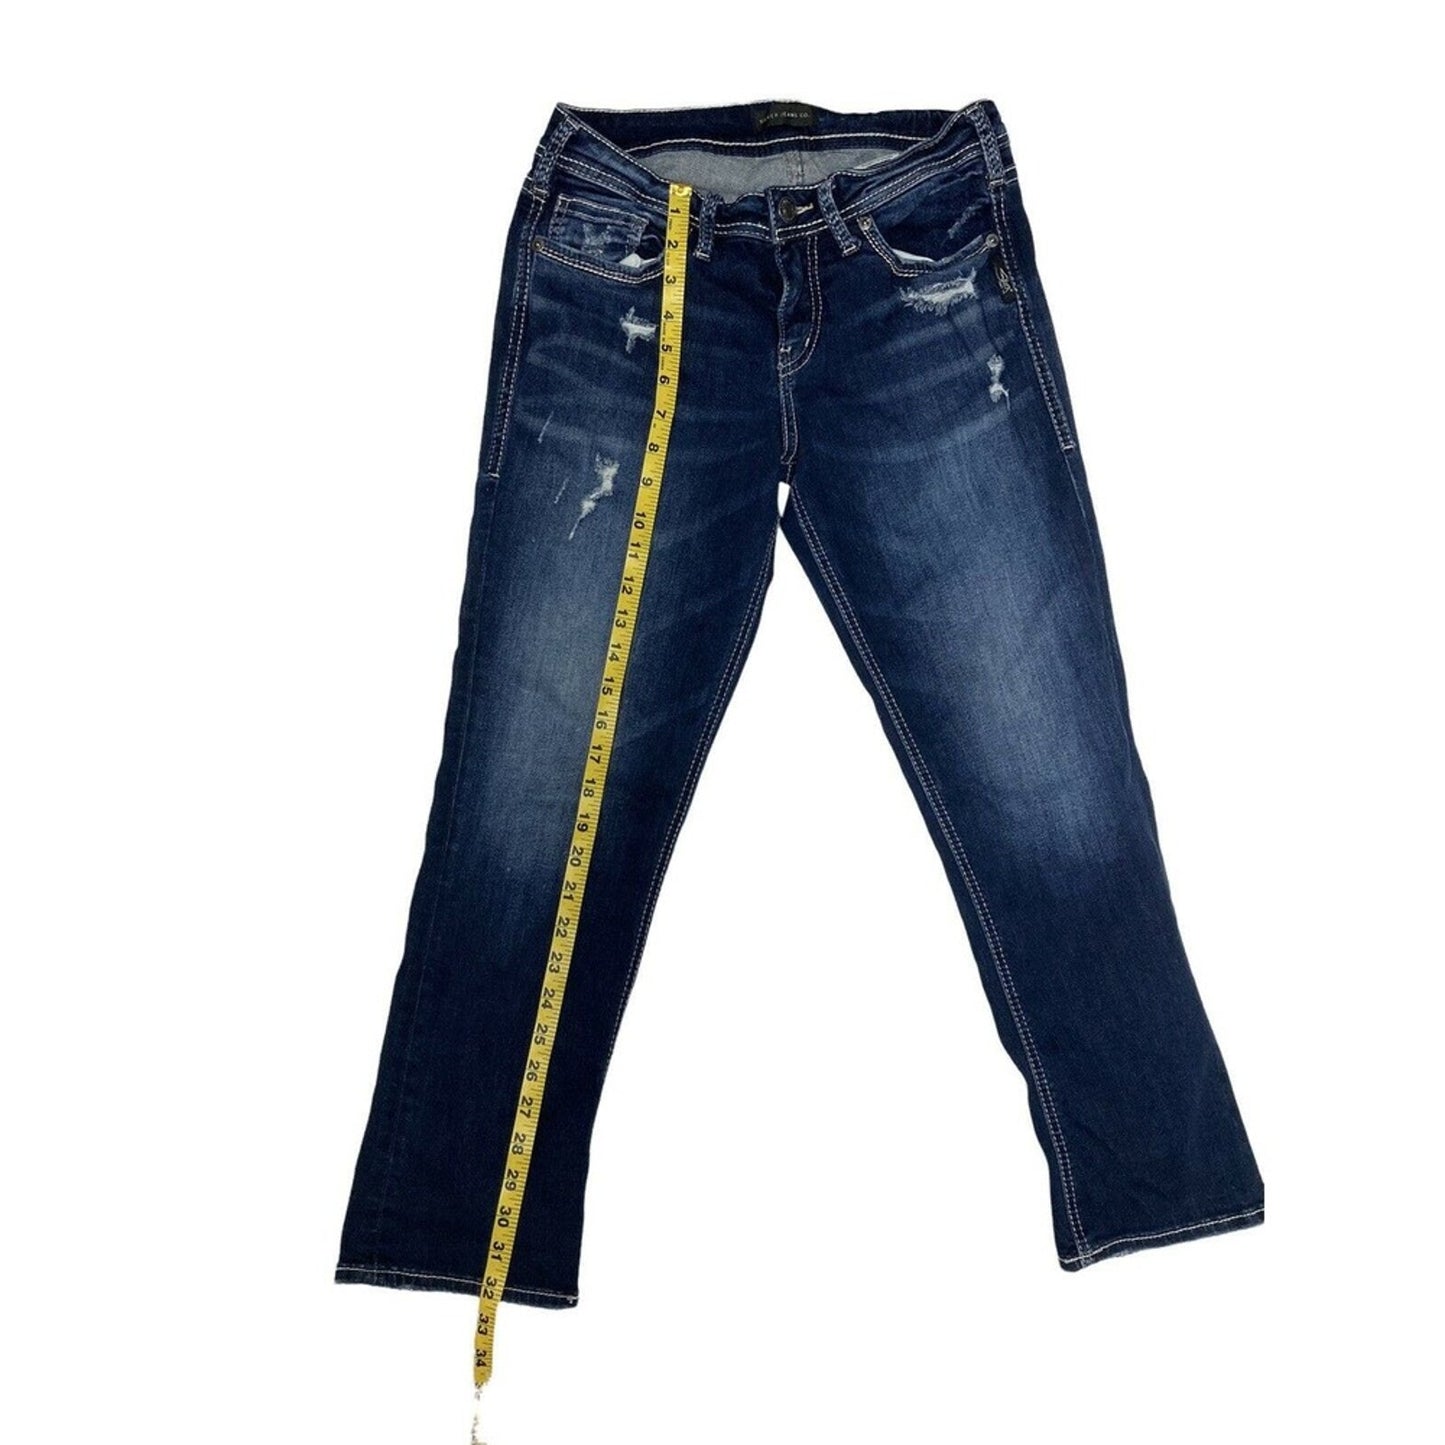 Silver Jeans Co Suki Capri Distressed Dark Wash Denim Jeans Size W28/L22.5